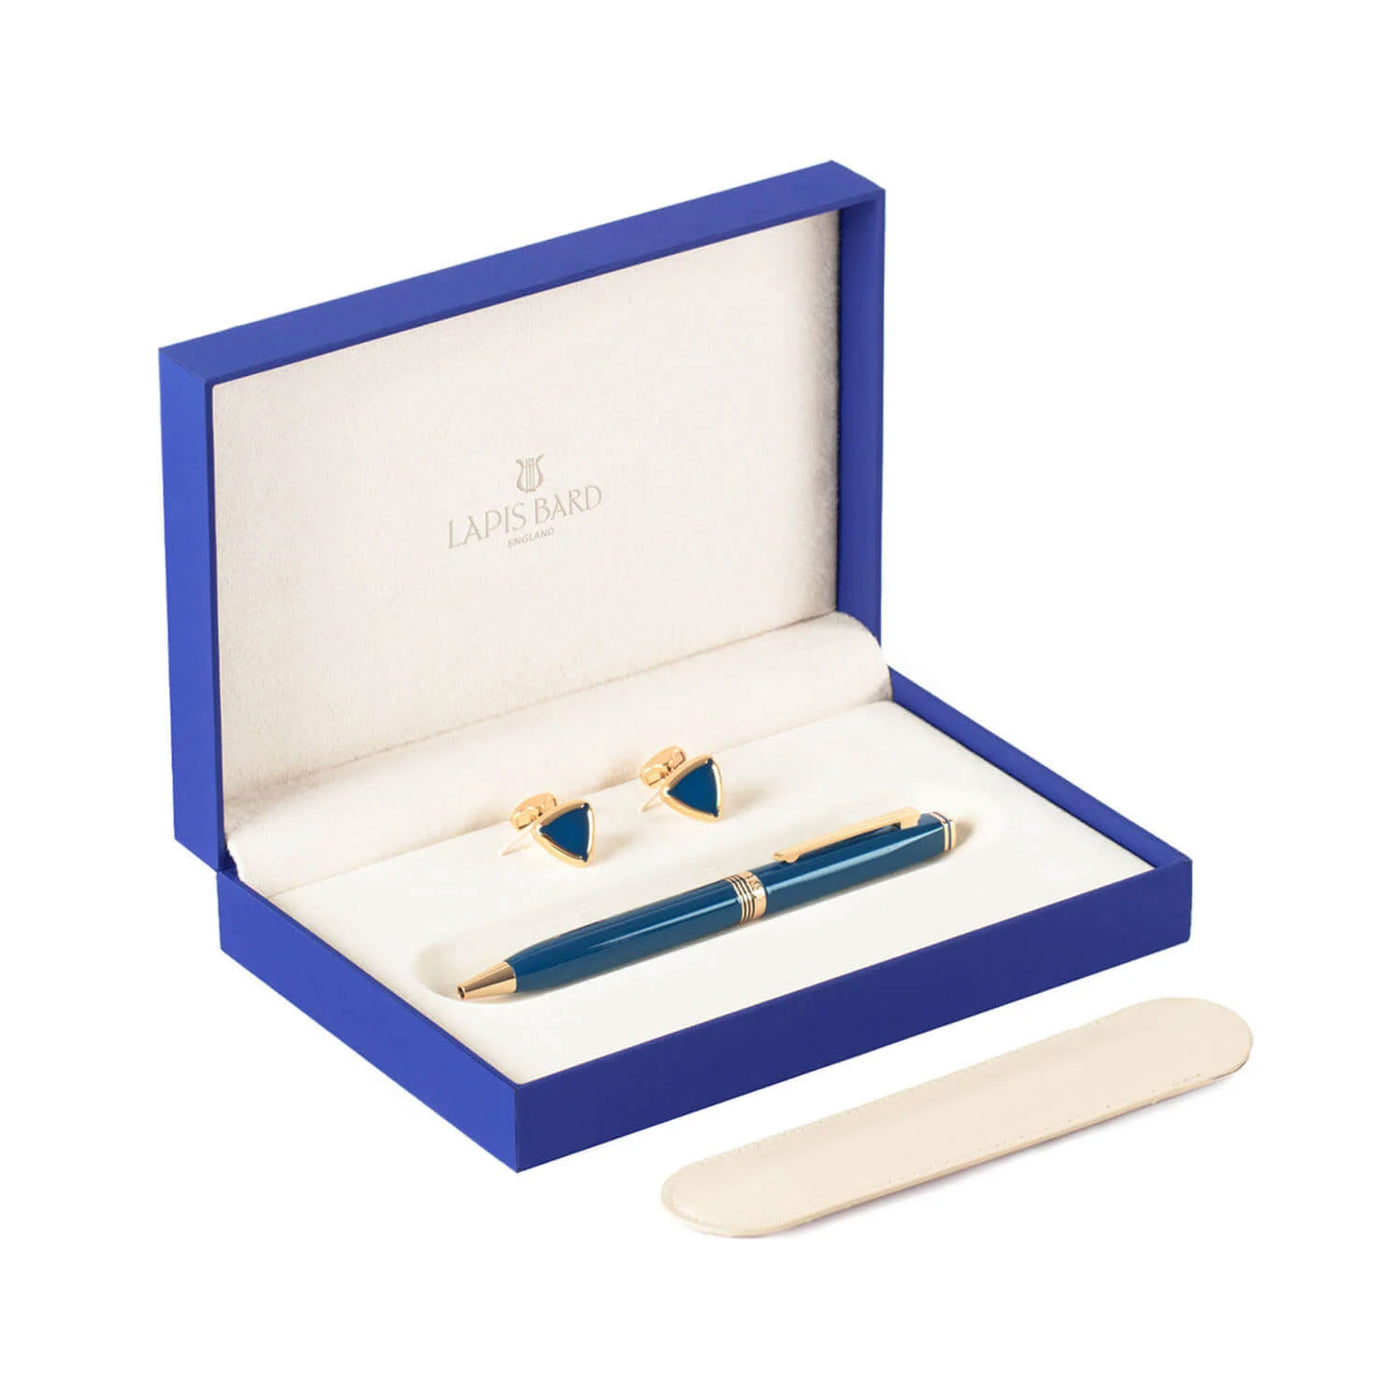 Lapis Bard Gift Set - Contemporary Blue Ball Pen with Shard Blue Gold Cufflinks 1